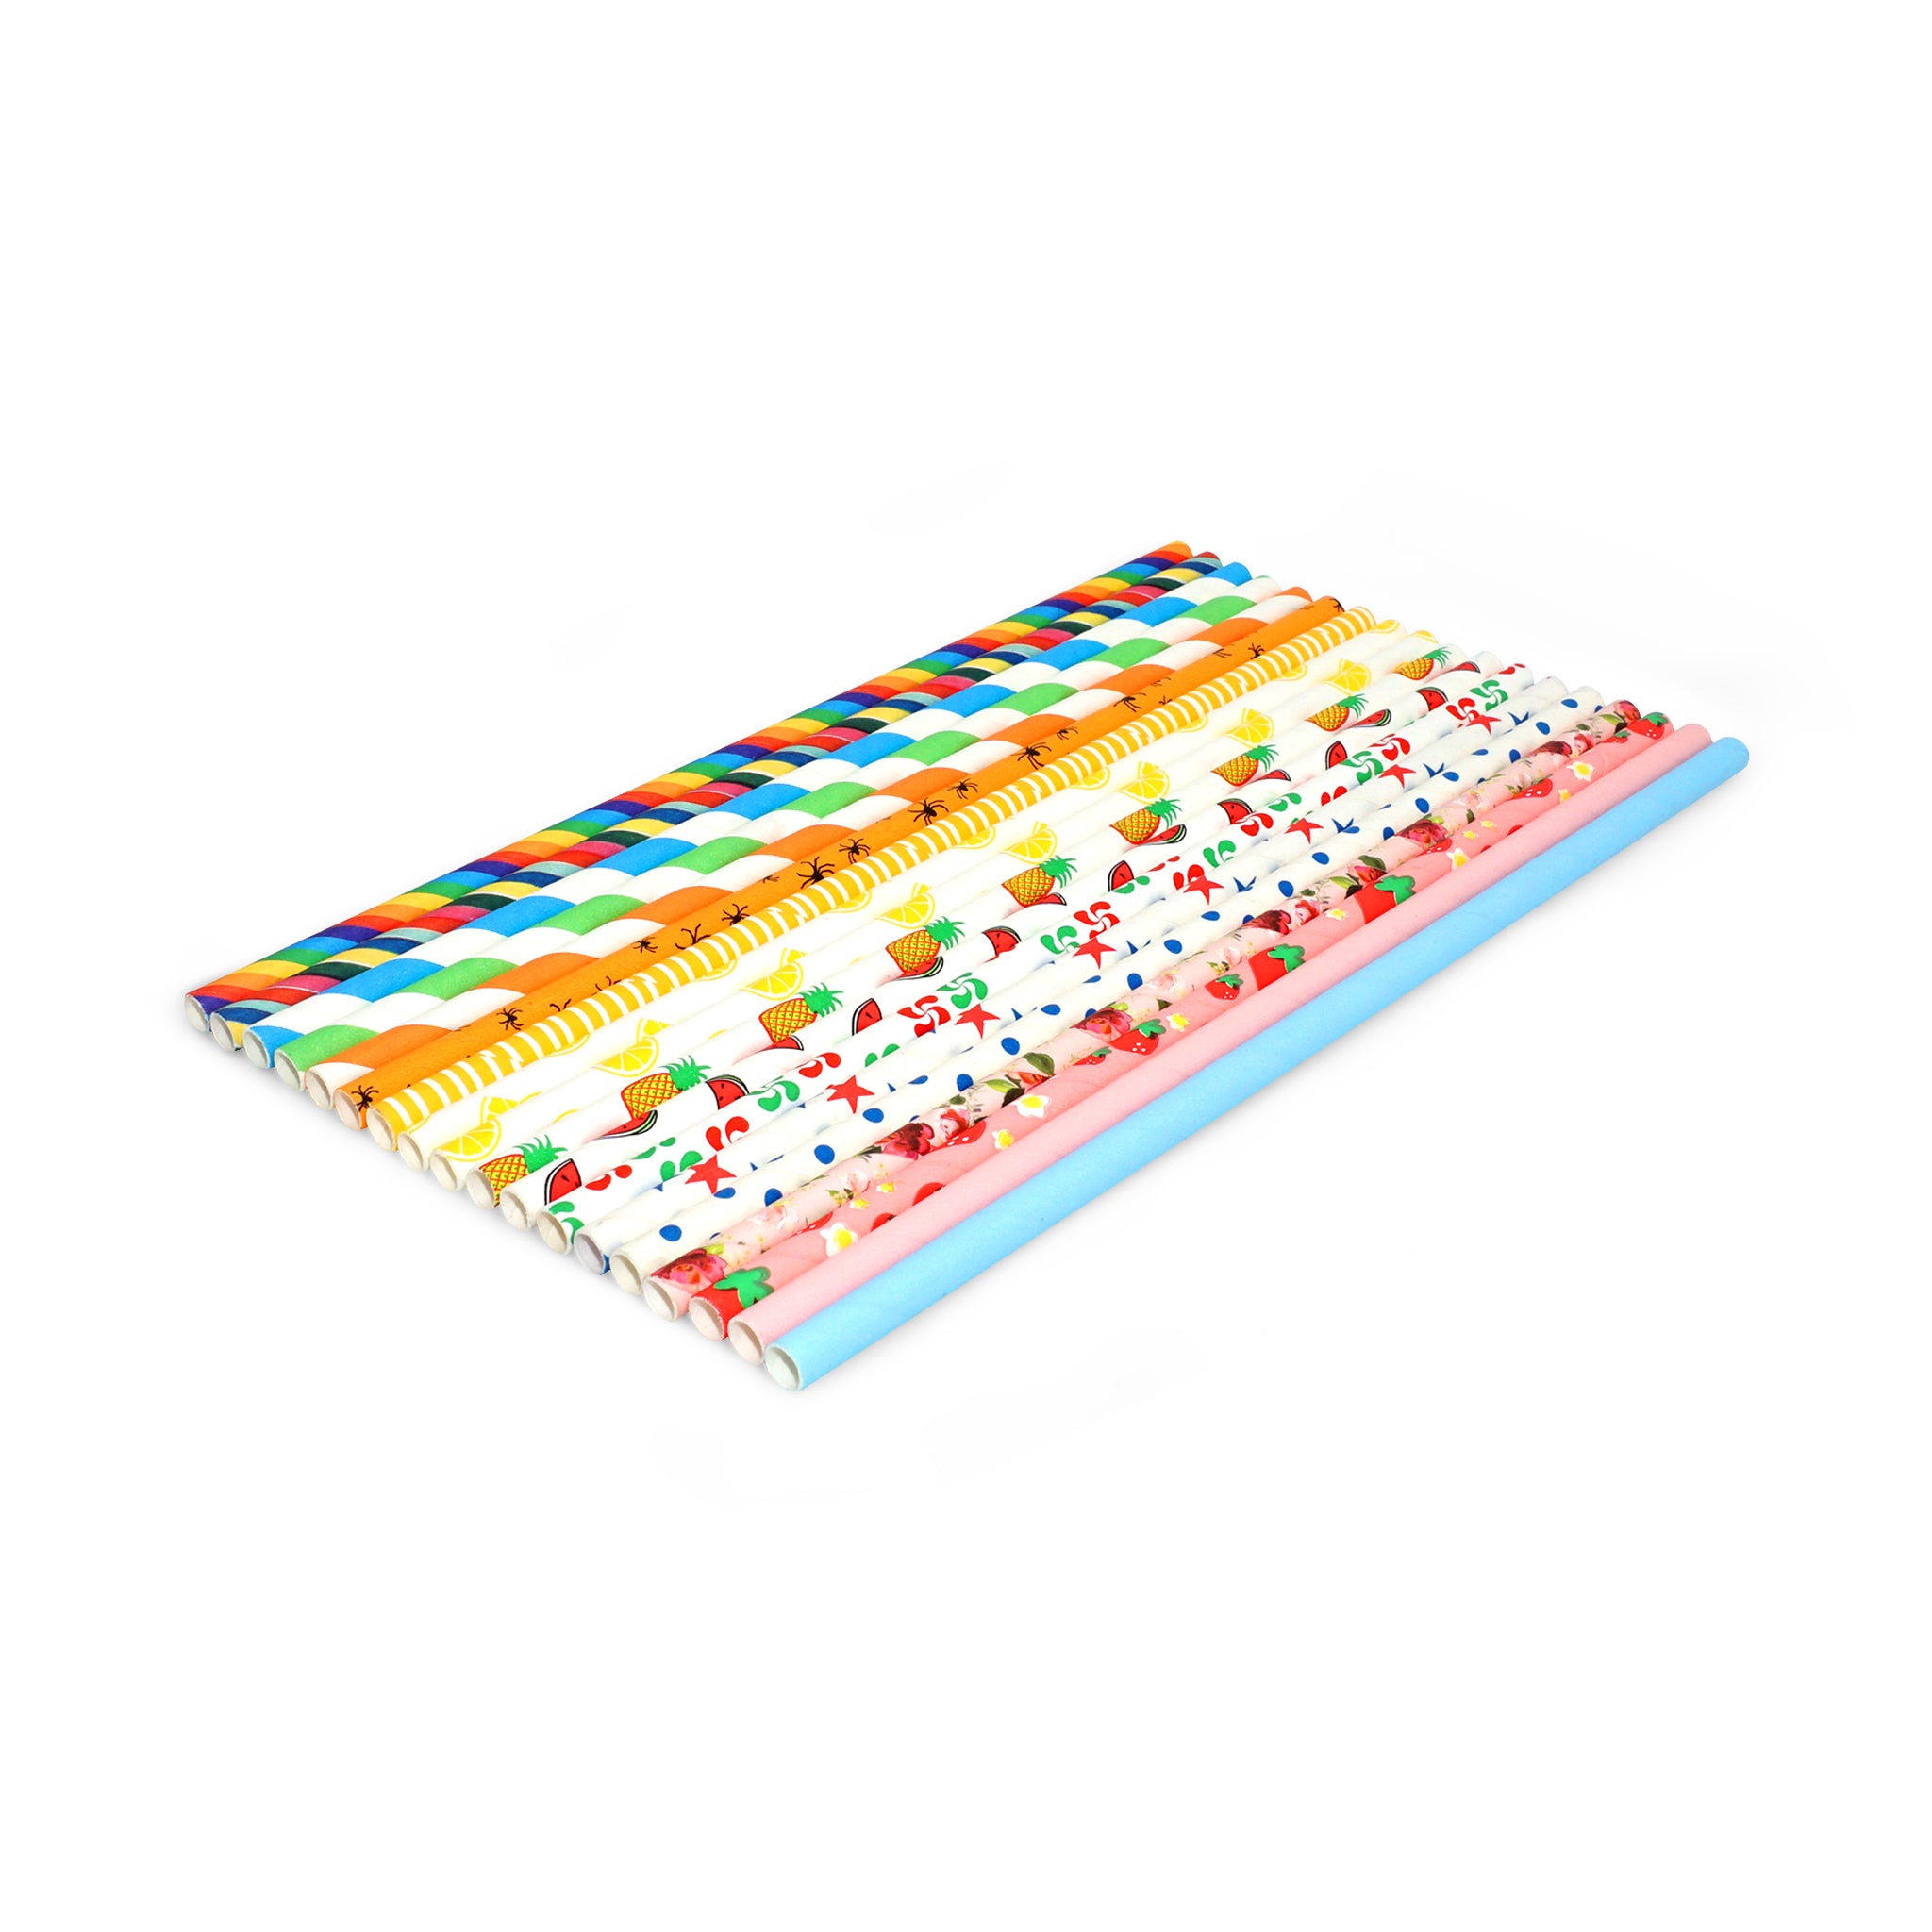 Custom Printed Eco Friendly Paper Straws